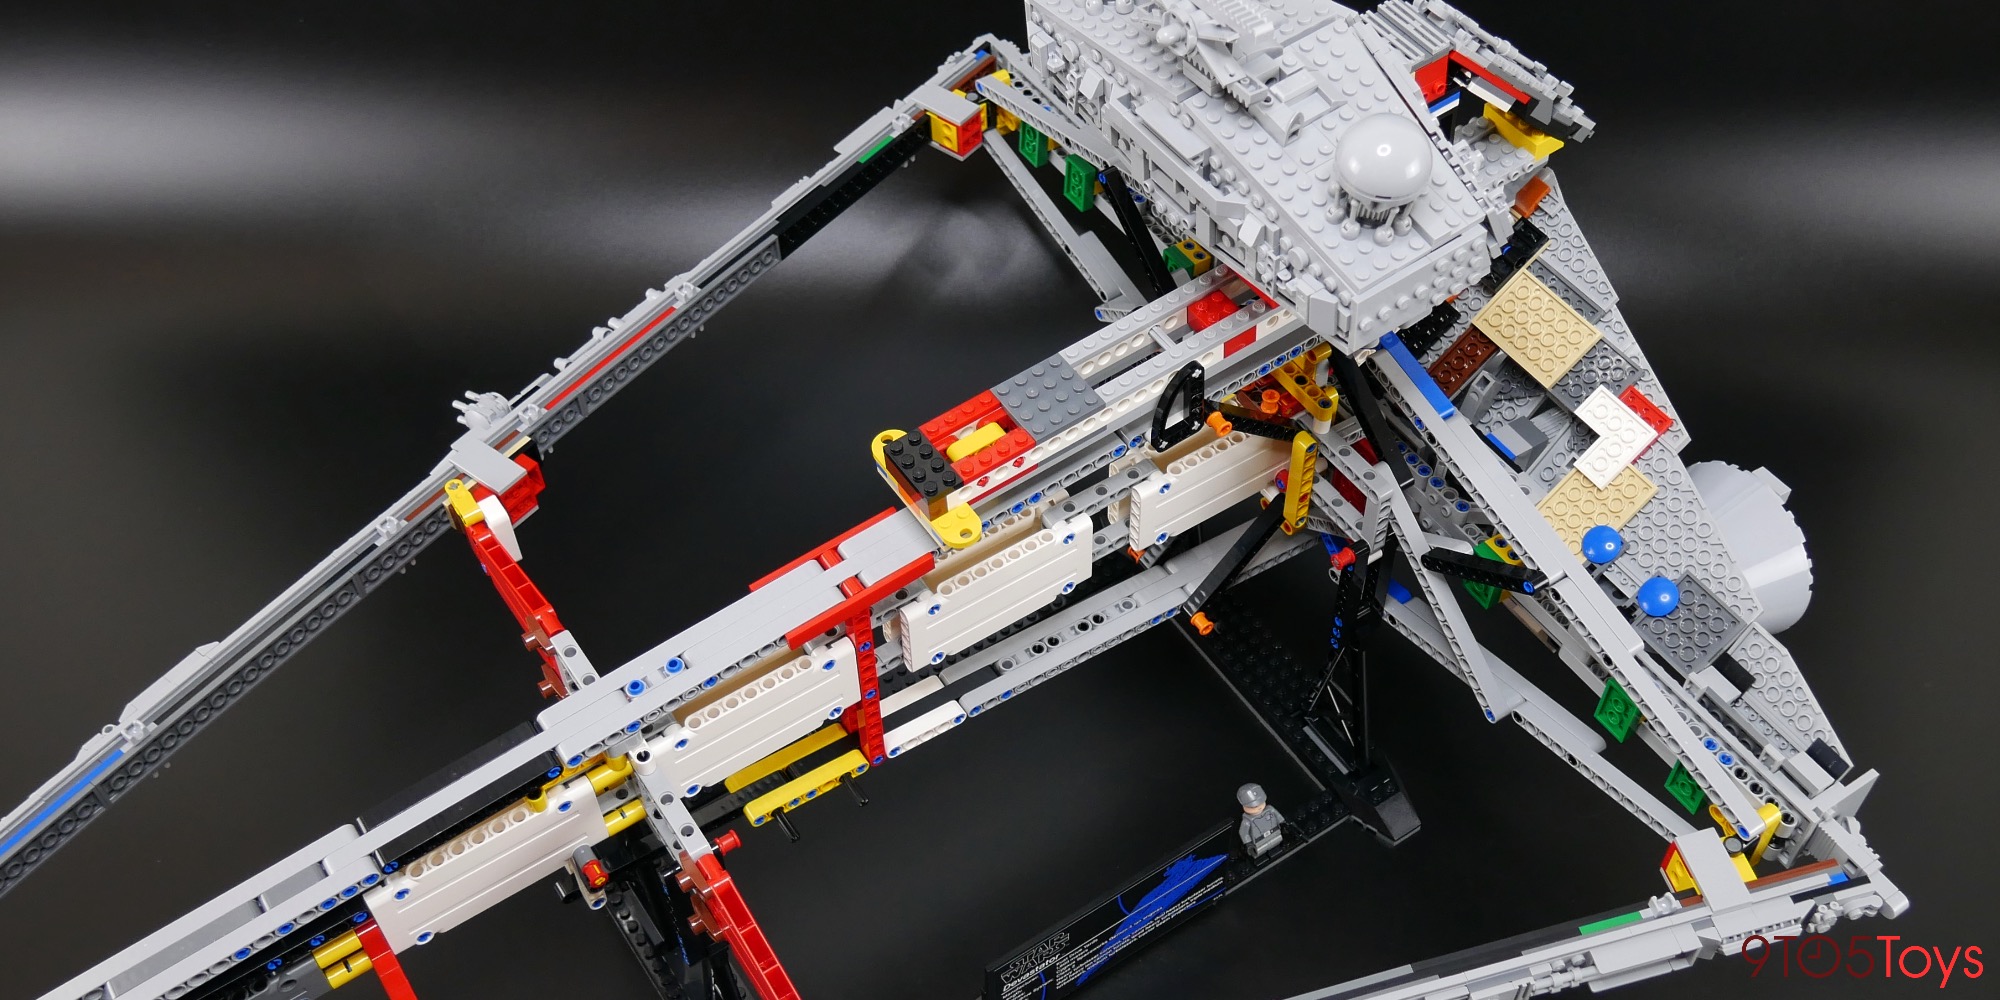 REVIEW LEGO Star Wars 75252 UCS Imperial Star Destroyer - HelloBricks